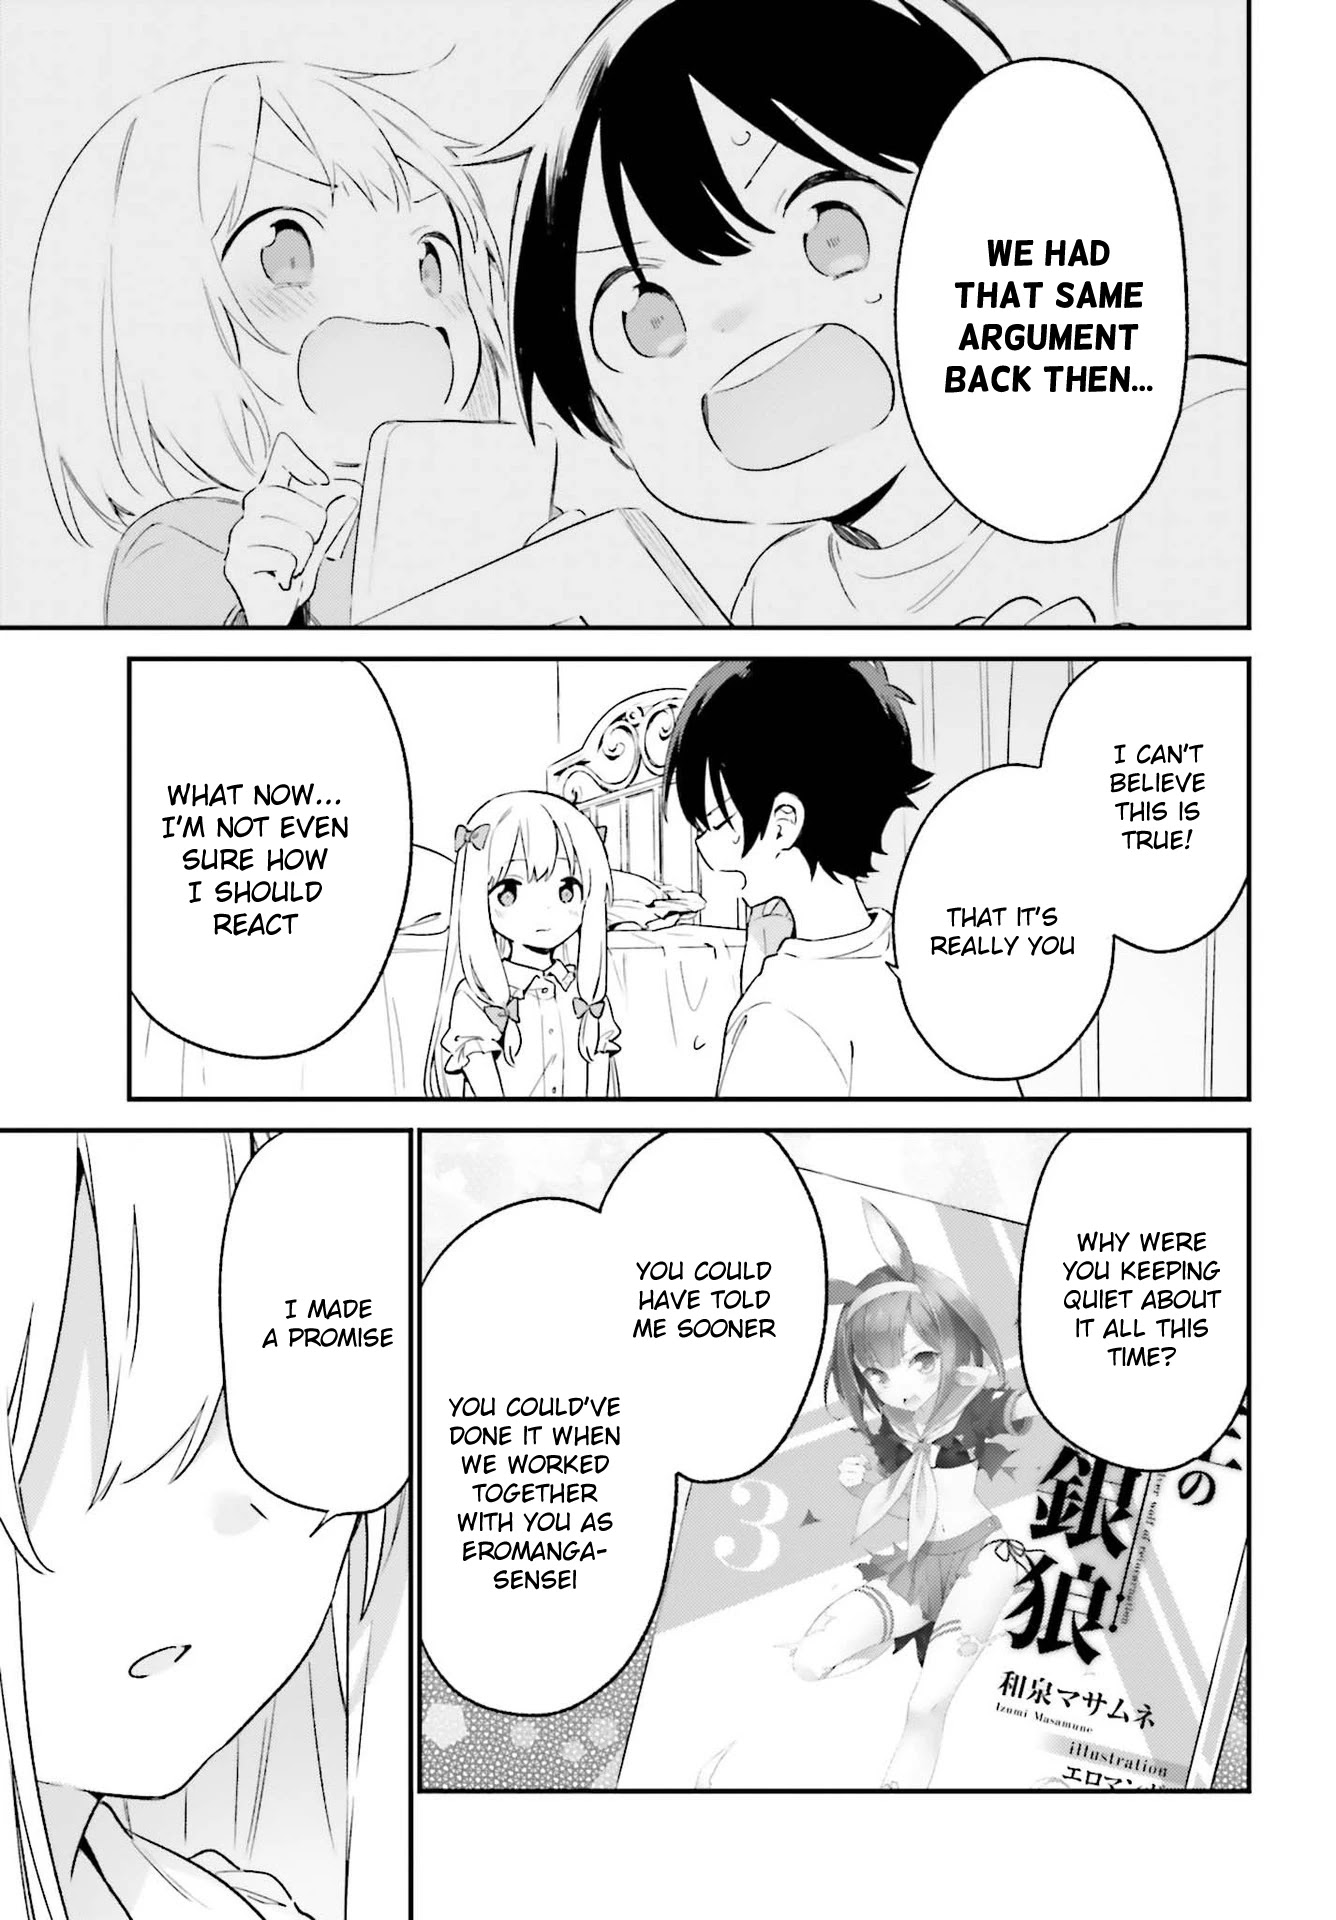 Ero Manga Sensei - 77 page 29-b1d96046